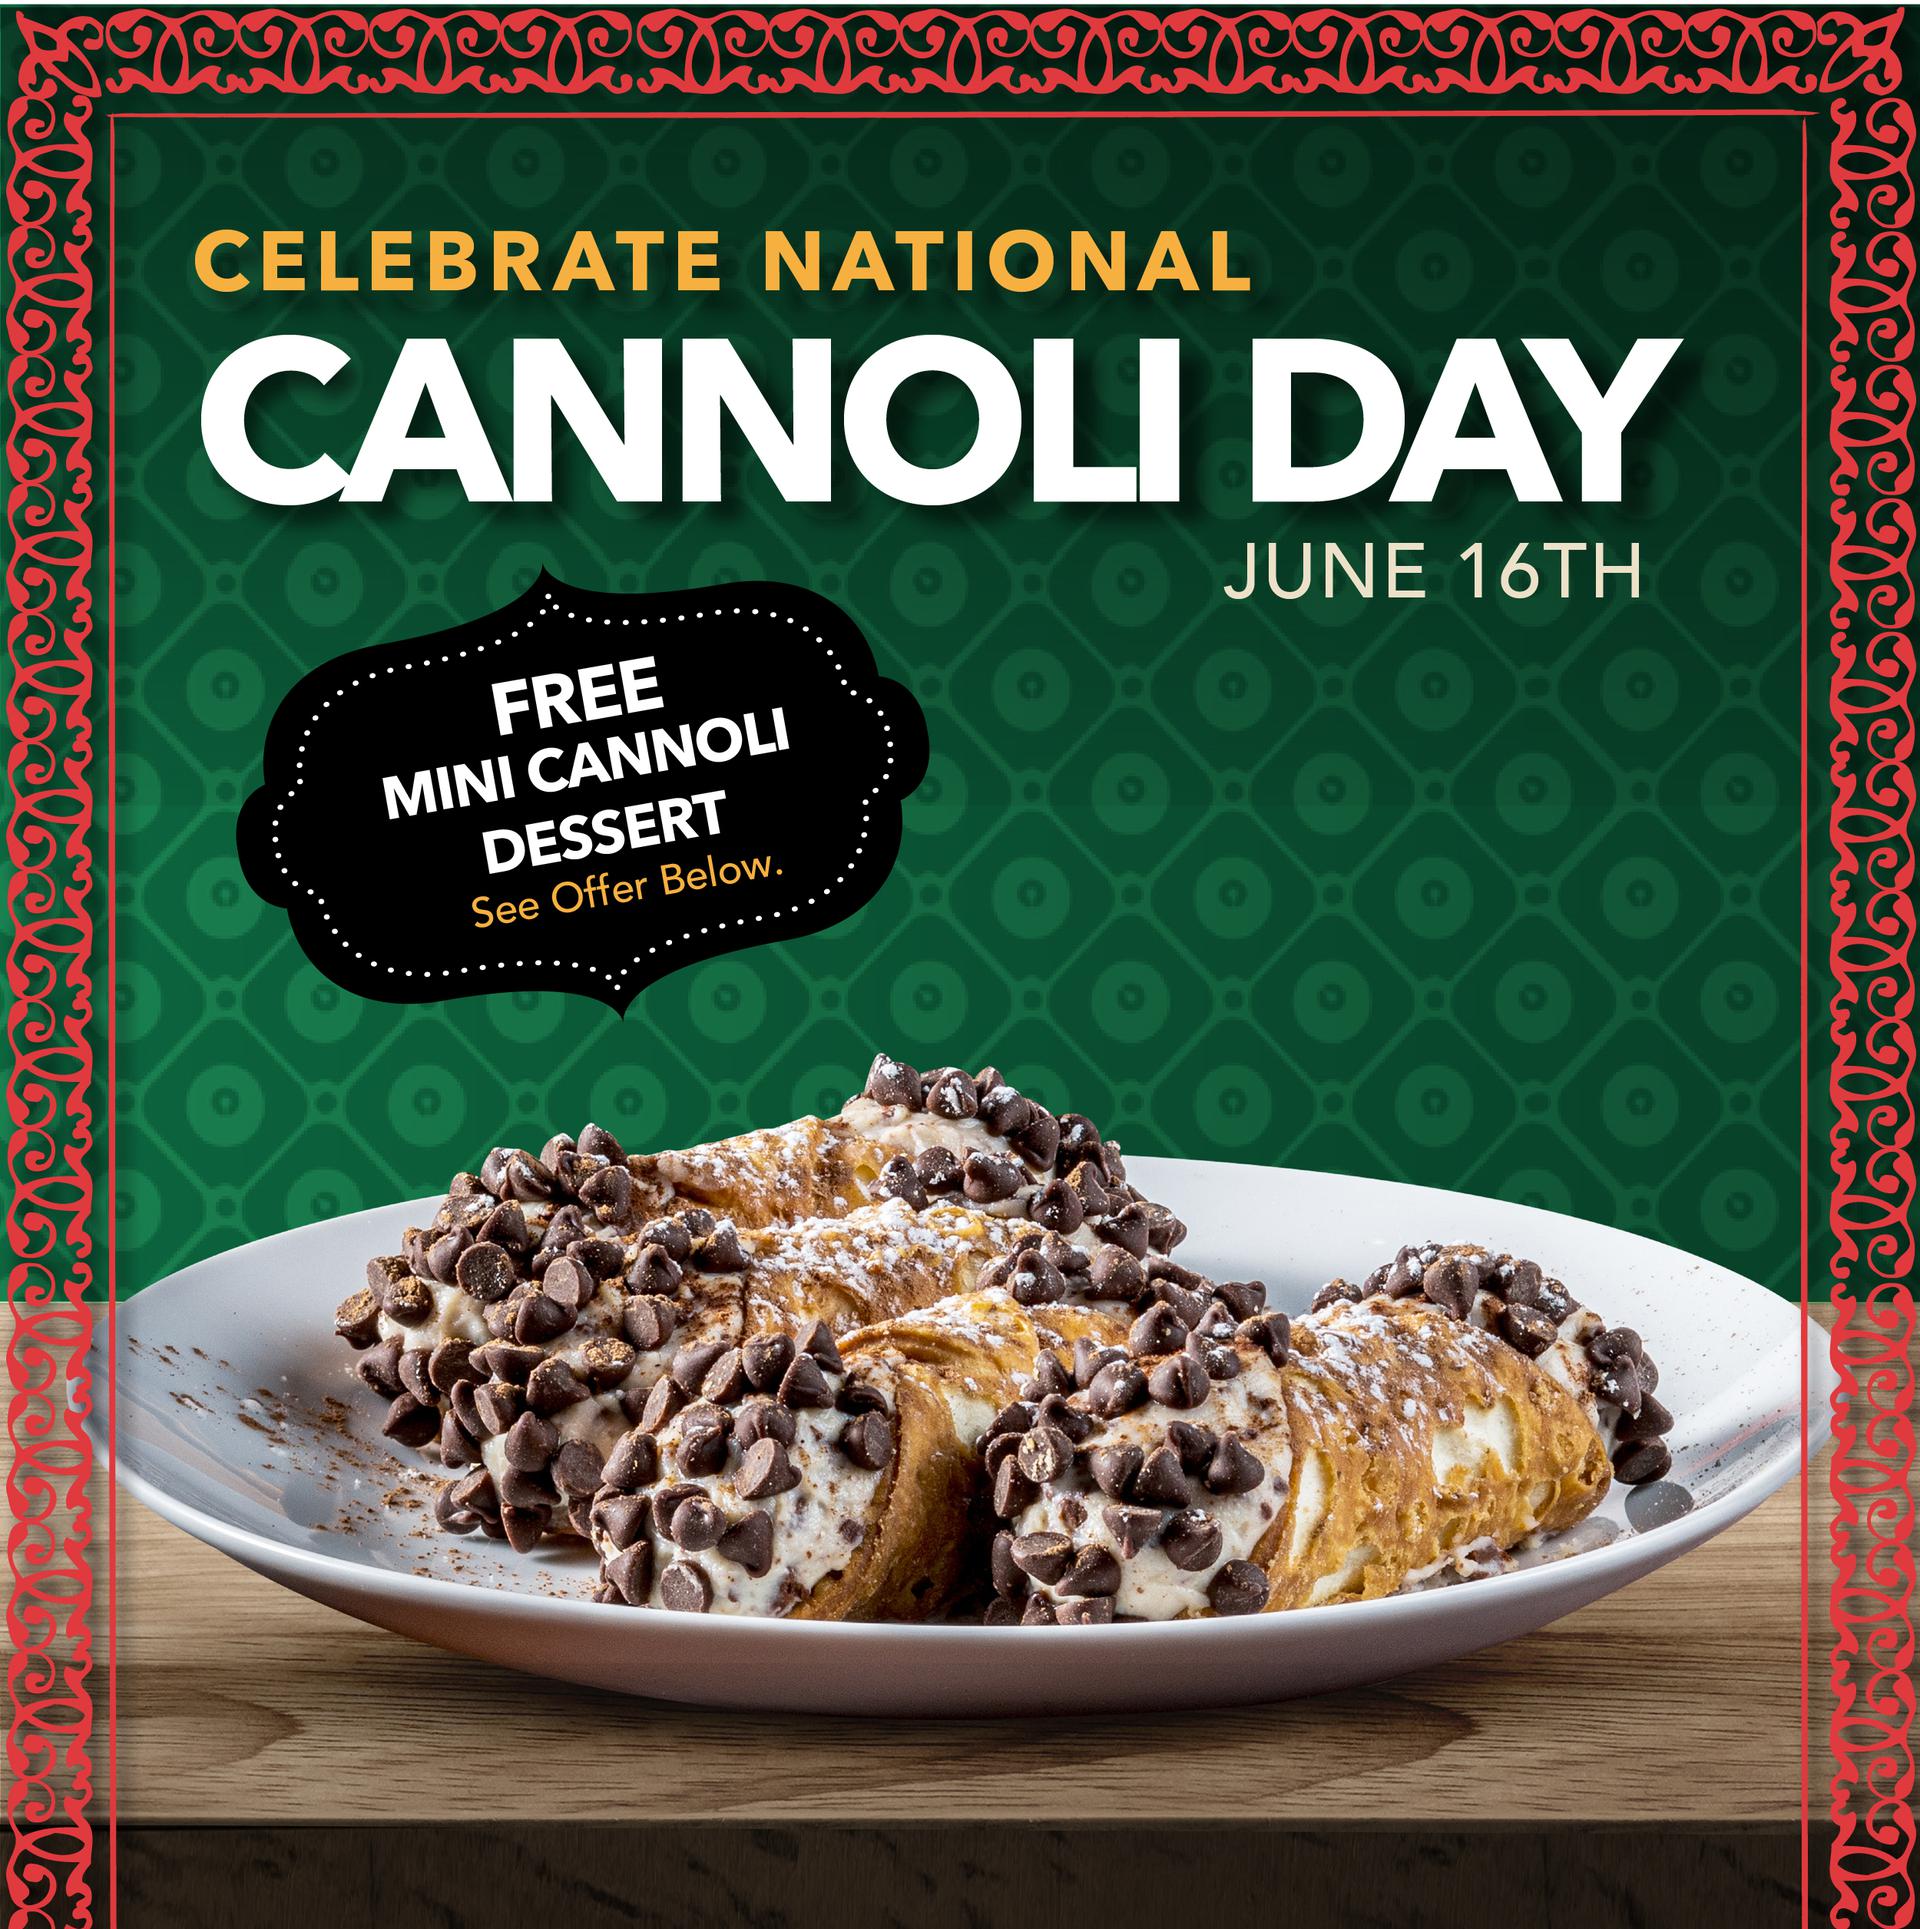 Make Your Nat'l Cannoli Day Sweeter! FREE Cannoli!! Buca di Beppo